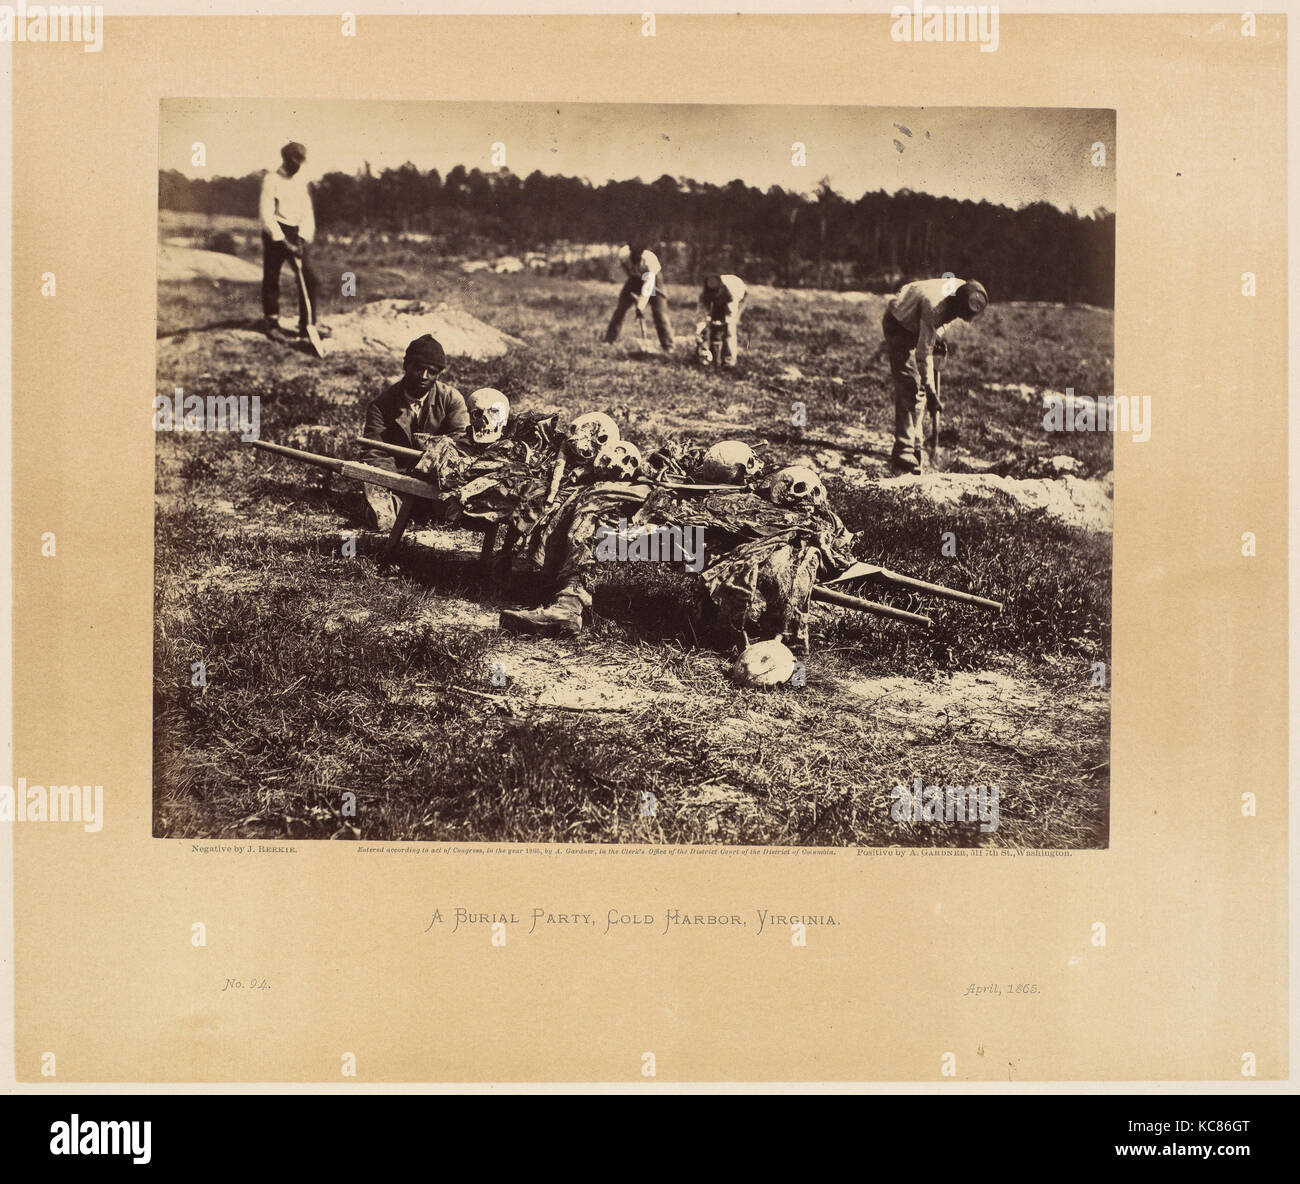 A Burial Party, Cold Harbor, Virginia., John Reekie, April 1865 Stock Photo